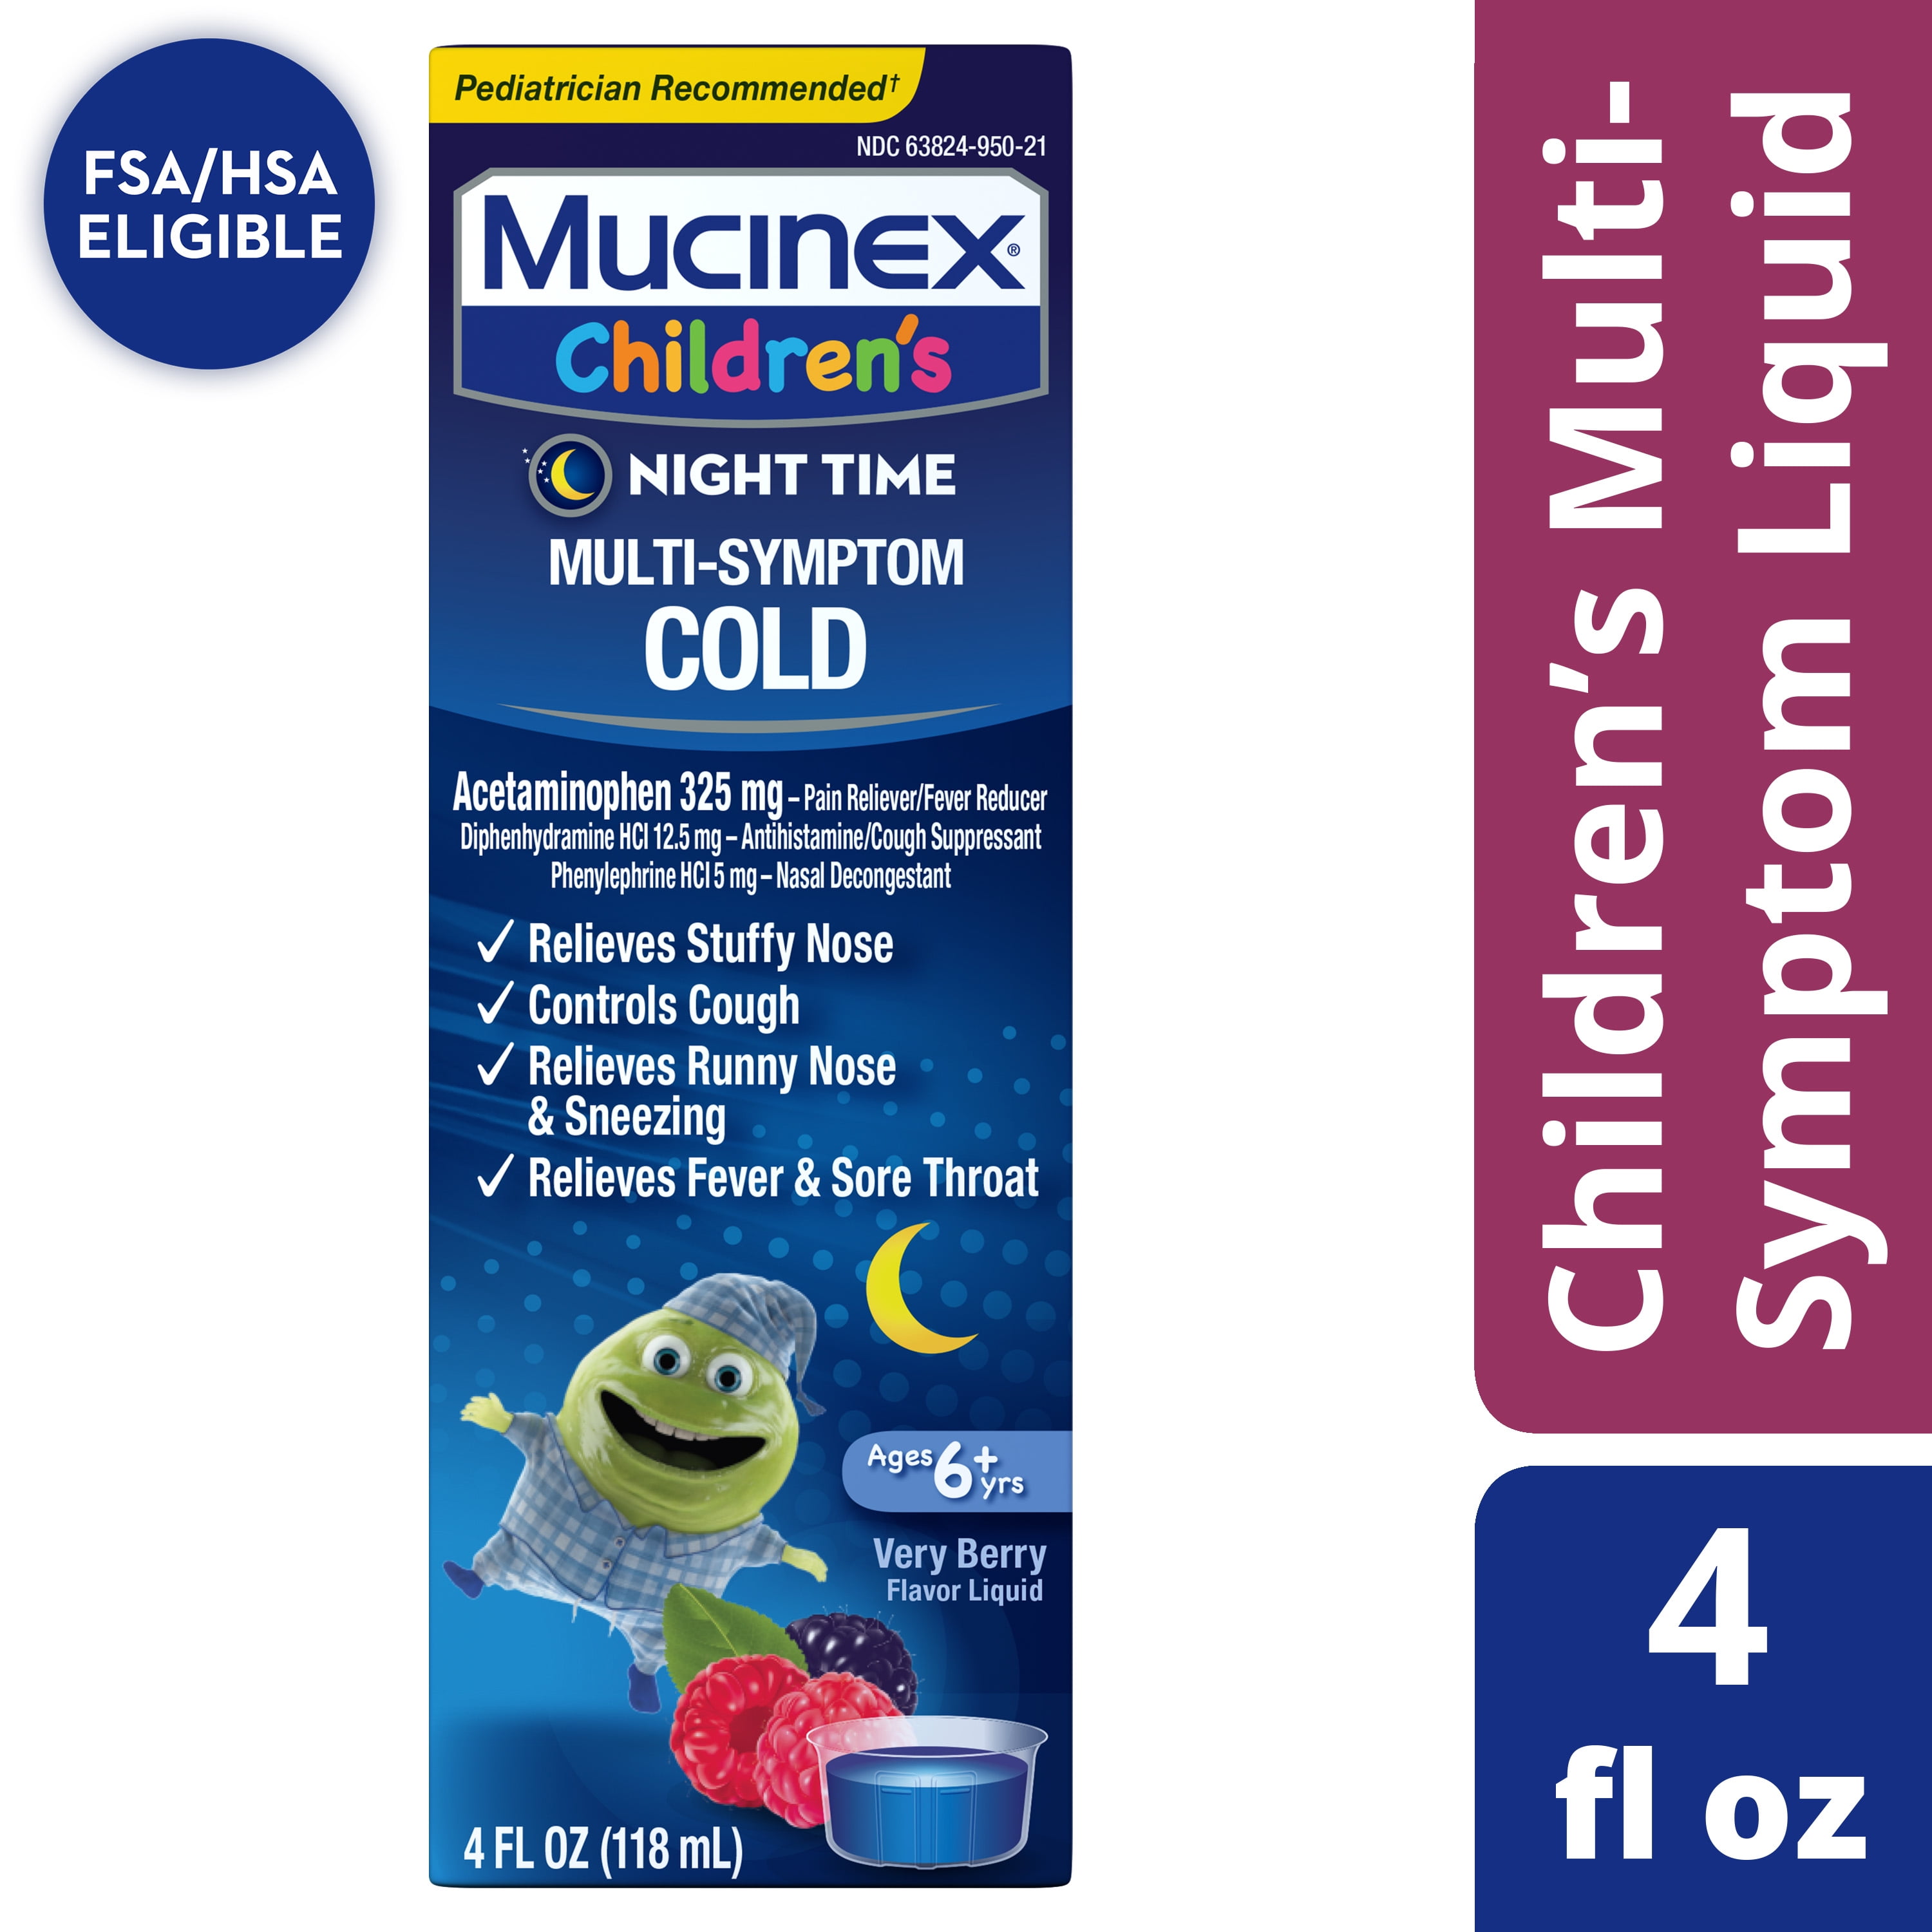 4-Oz Mucinex Children's Night Time Multi-Symptom Cold Medicine (Very Berry) $2.50 w/ S&S + Free Shipping w/ Prime or on $35+